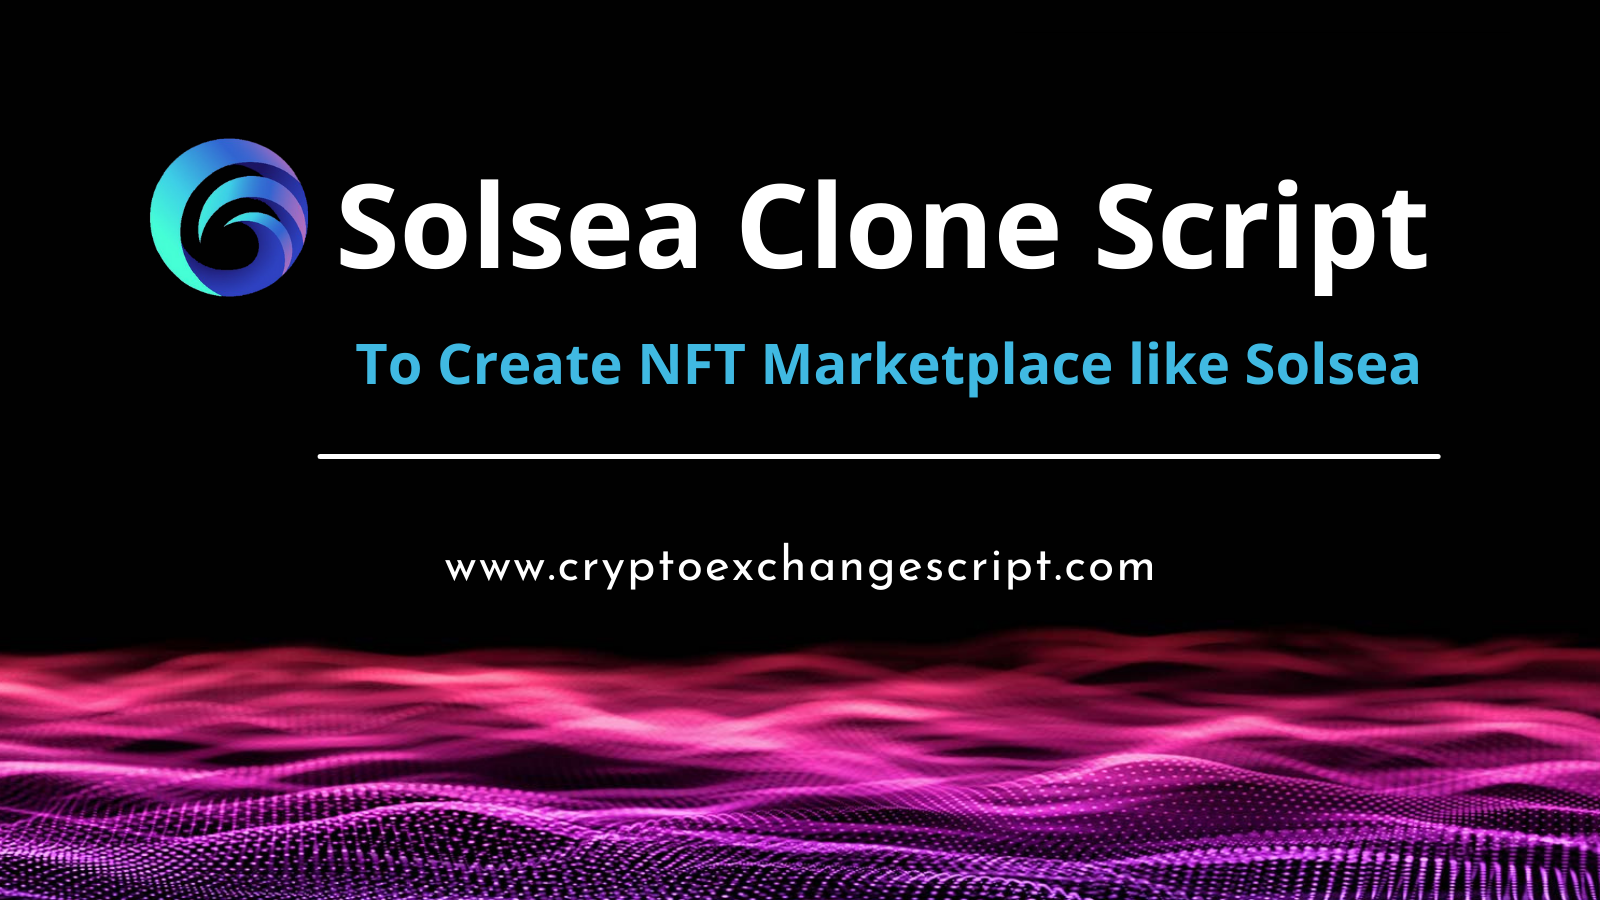 Solsea Clone Script - To Create NFT Marketplace like Solsea